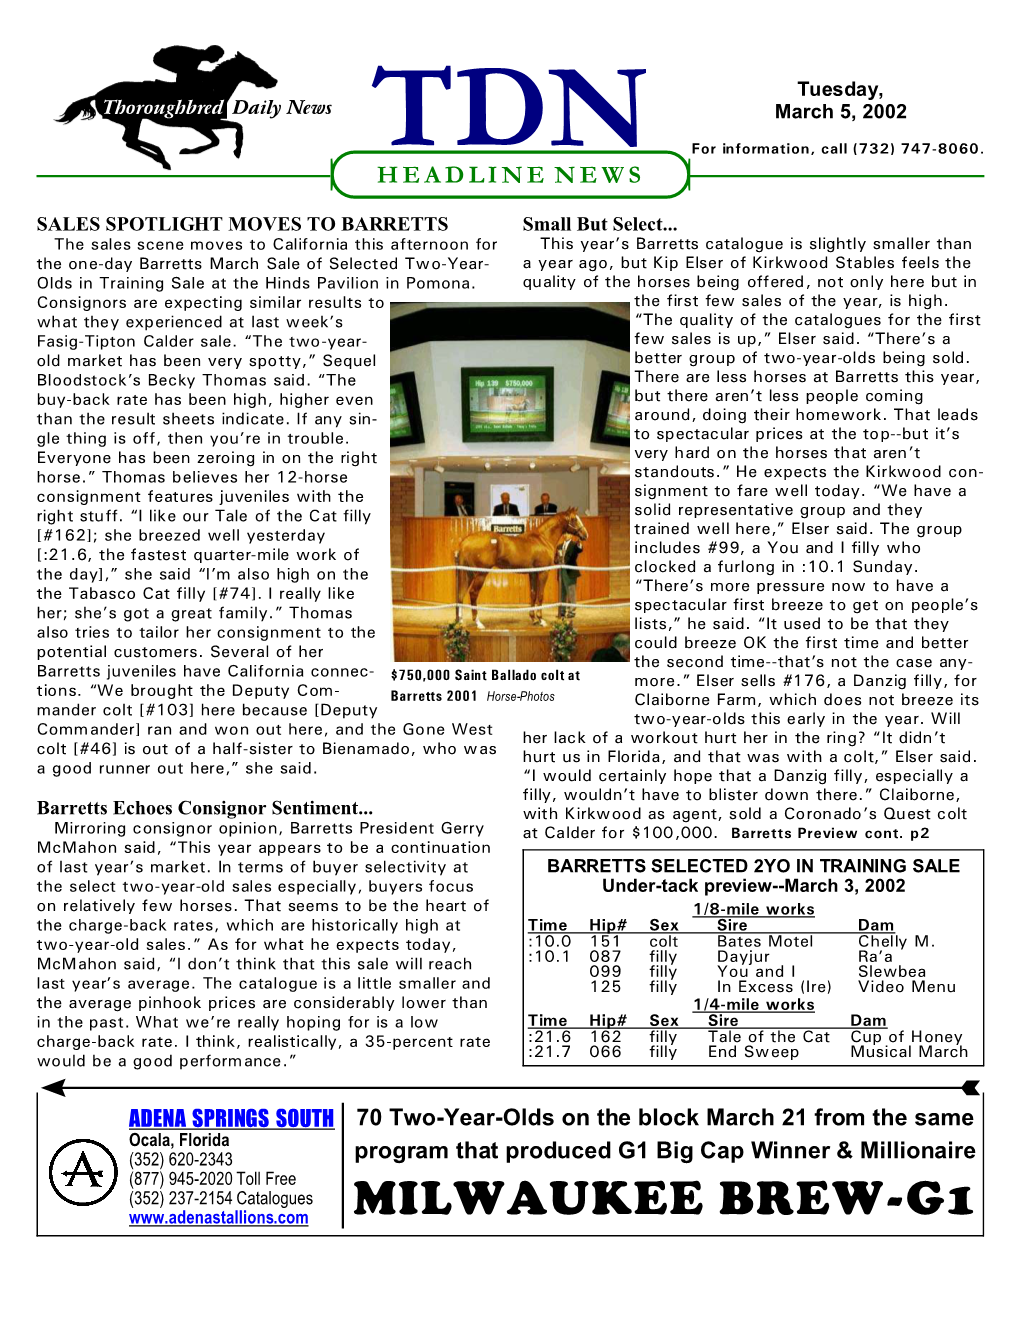 MILWAUKEE BREW-G1 TDN P HEADLINE NEWS • 3/5/02 • PAGE 2 of 4